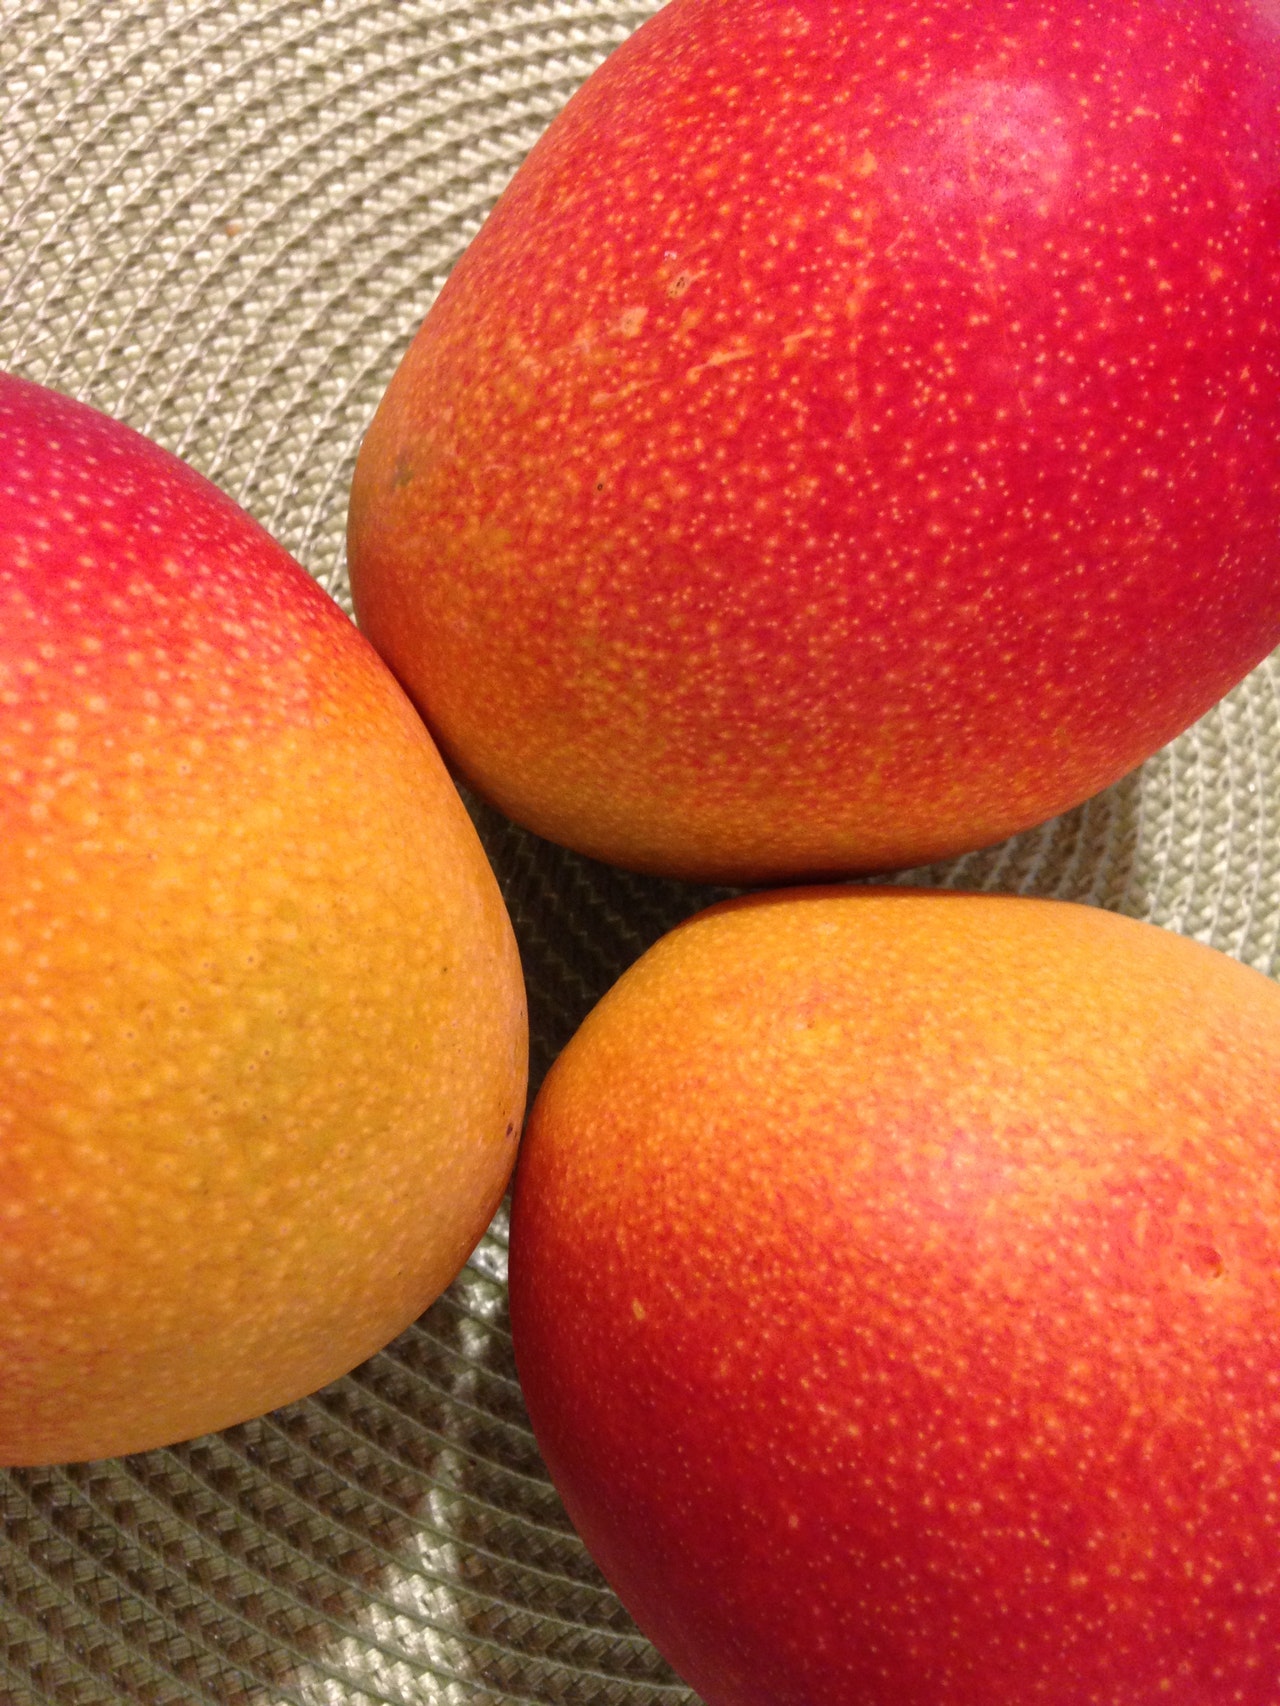 Alphonso Mangoes, mangoes to home,